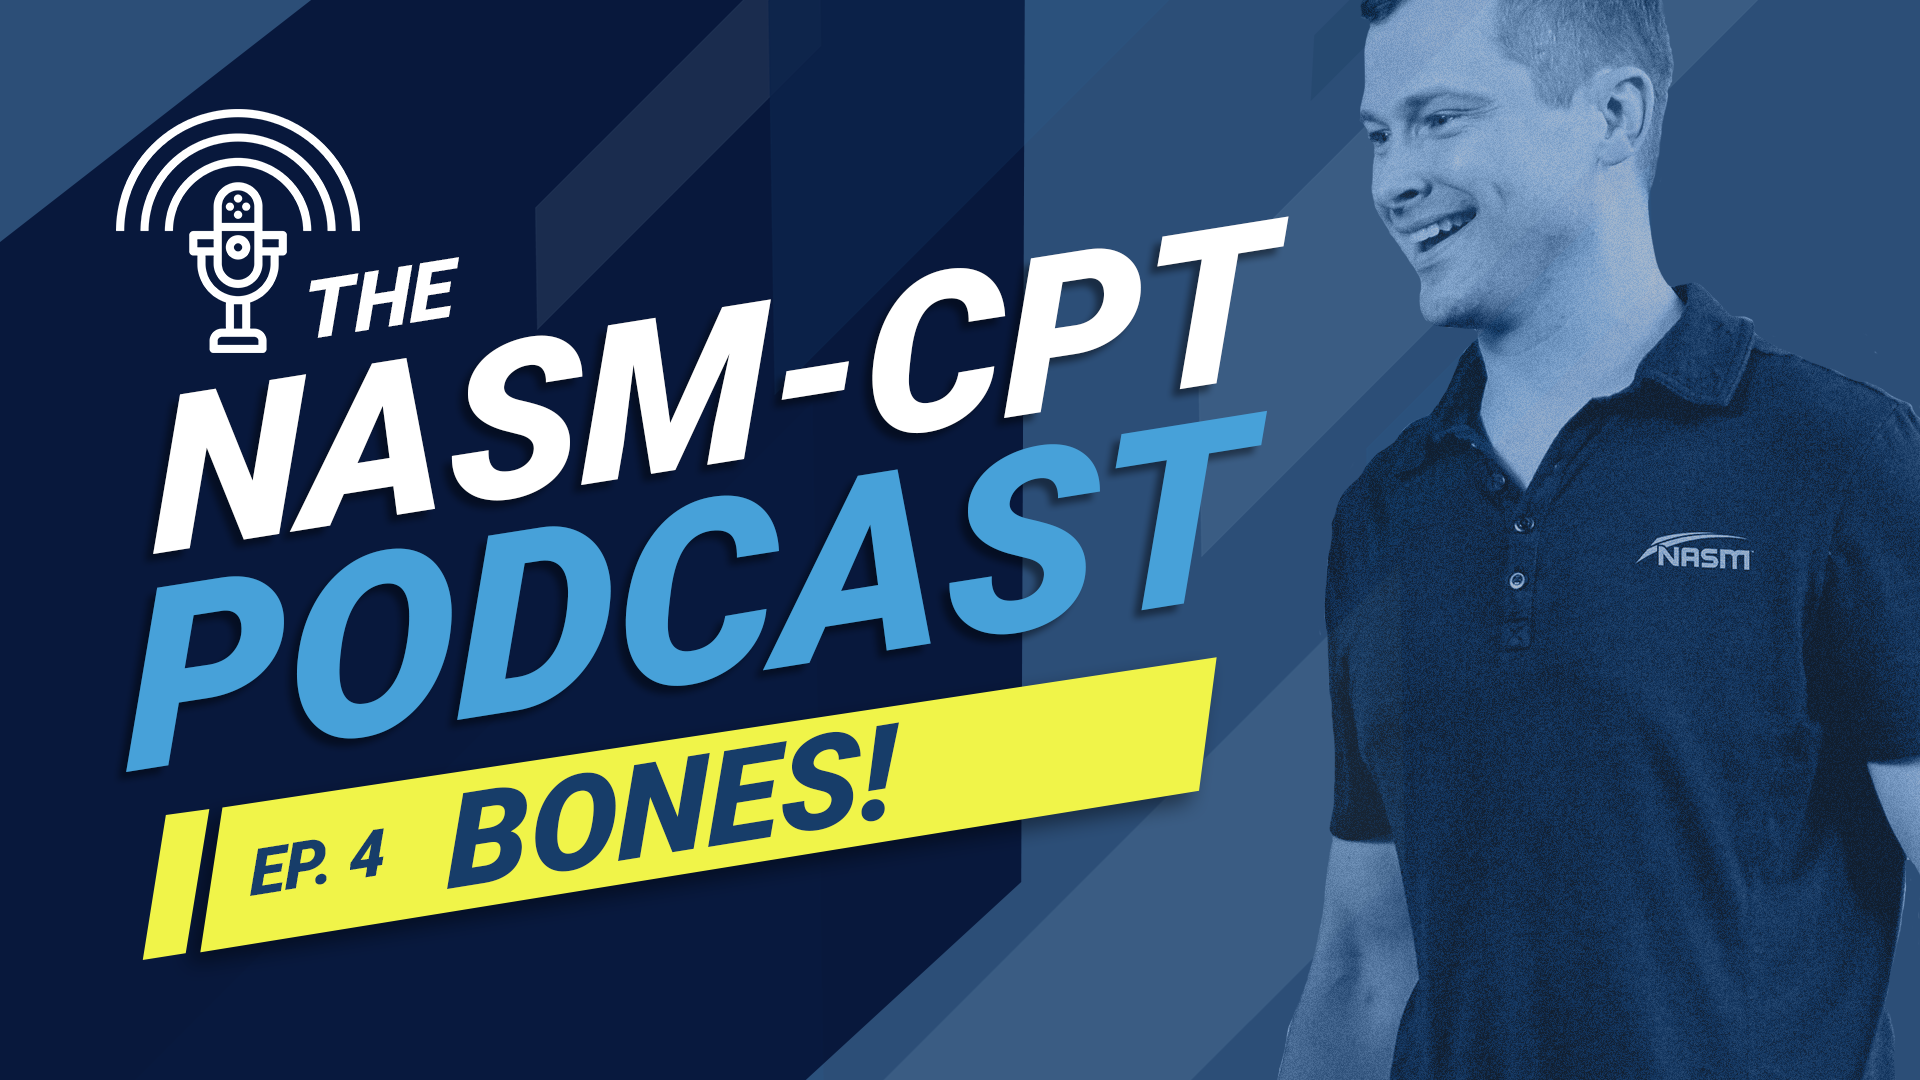 The Nasm Cpt Podcast Bones